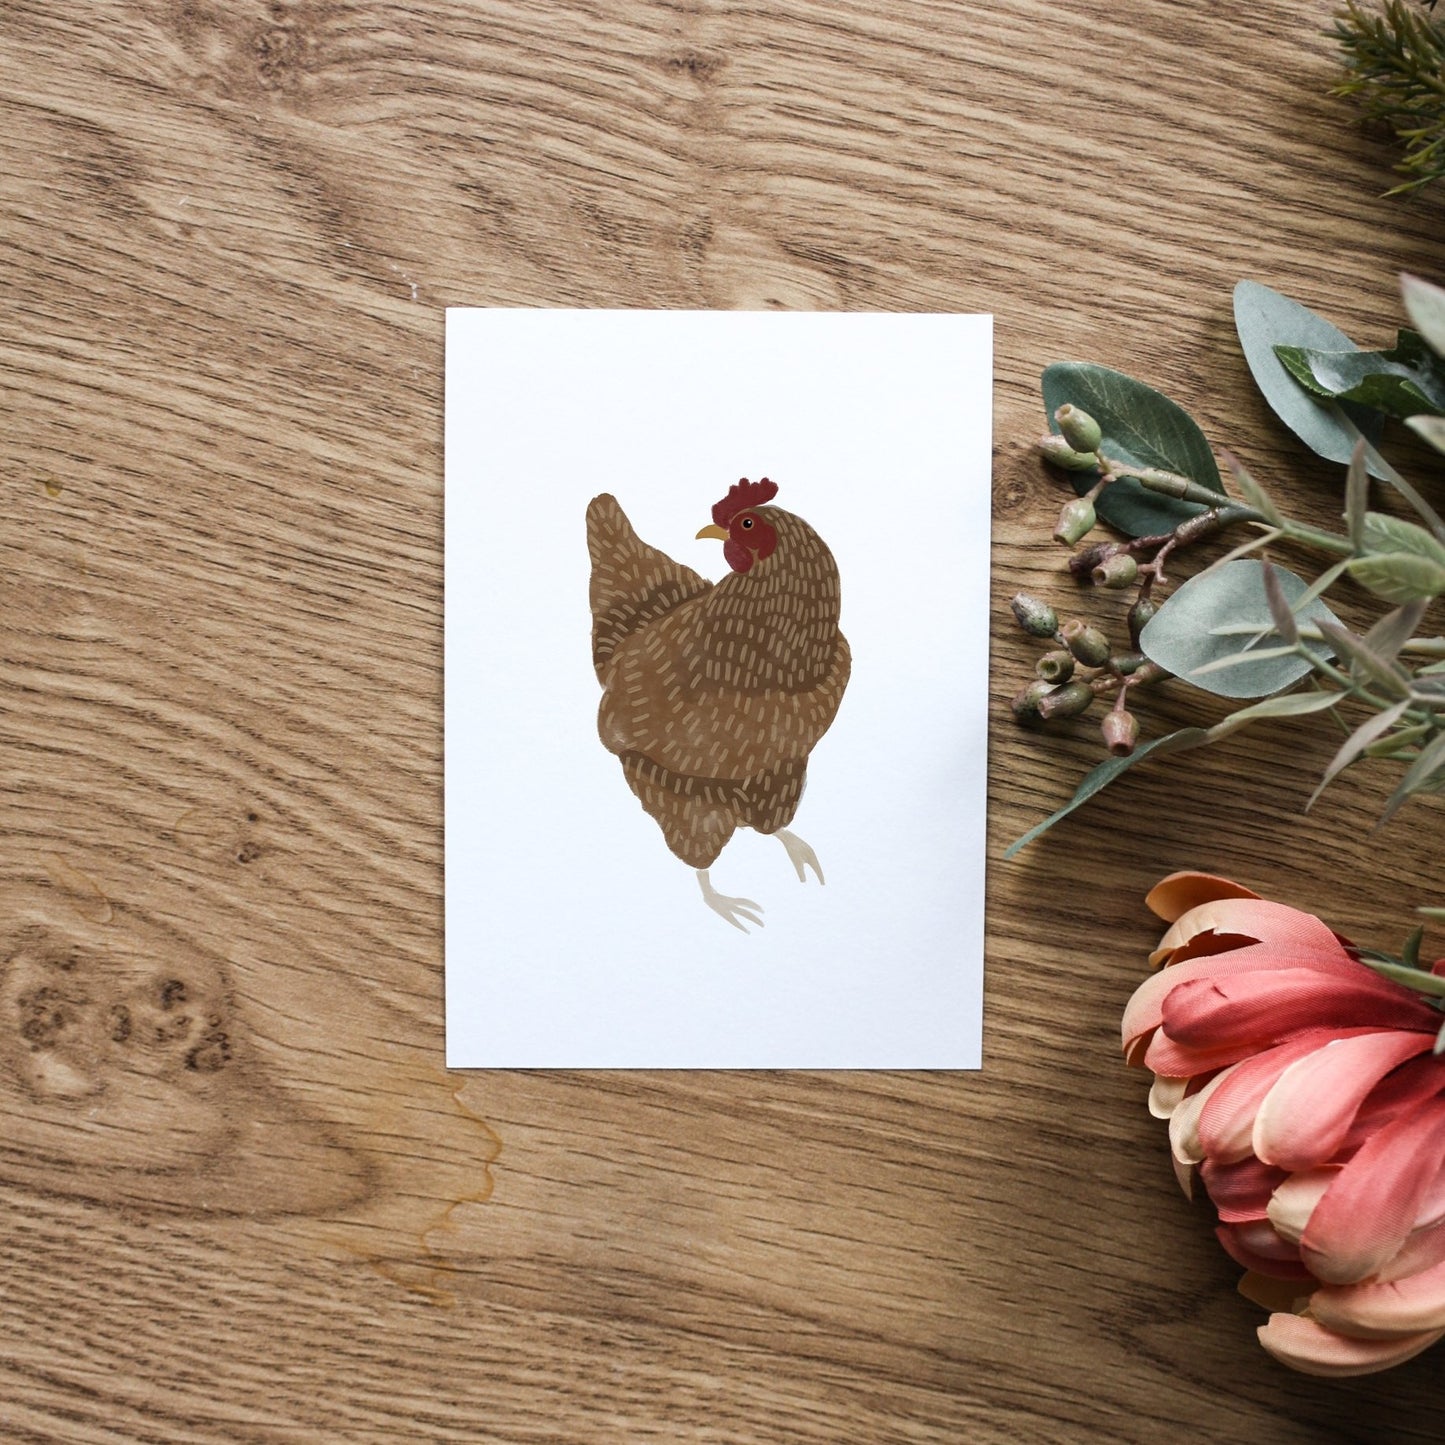 Set of 3 Chicken Postcard Prints